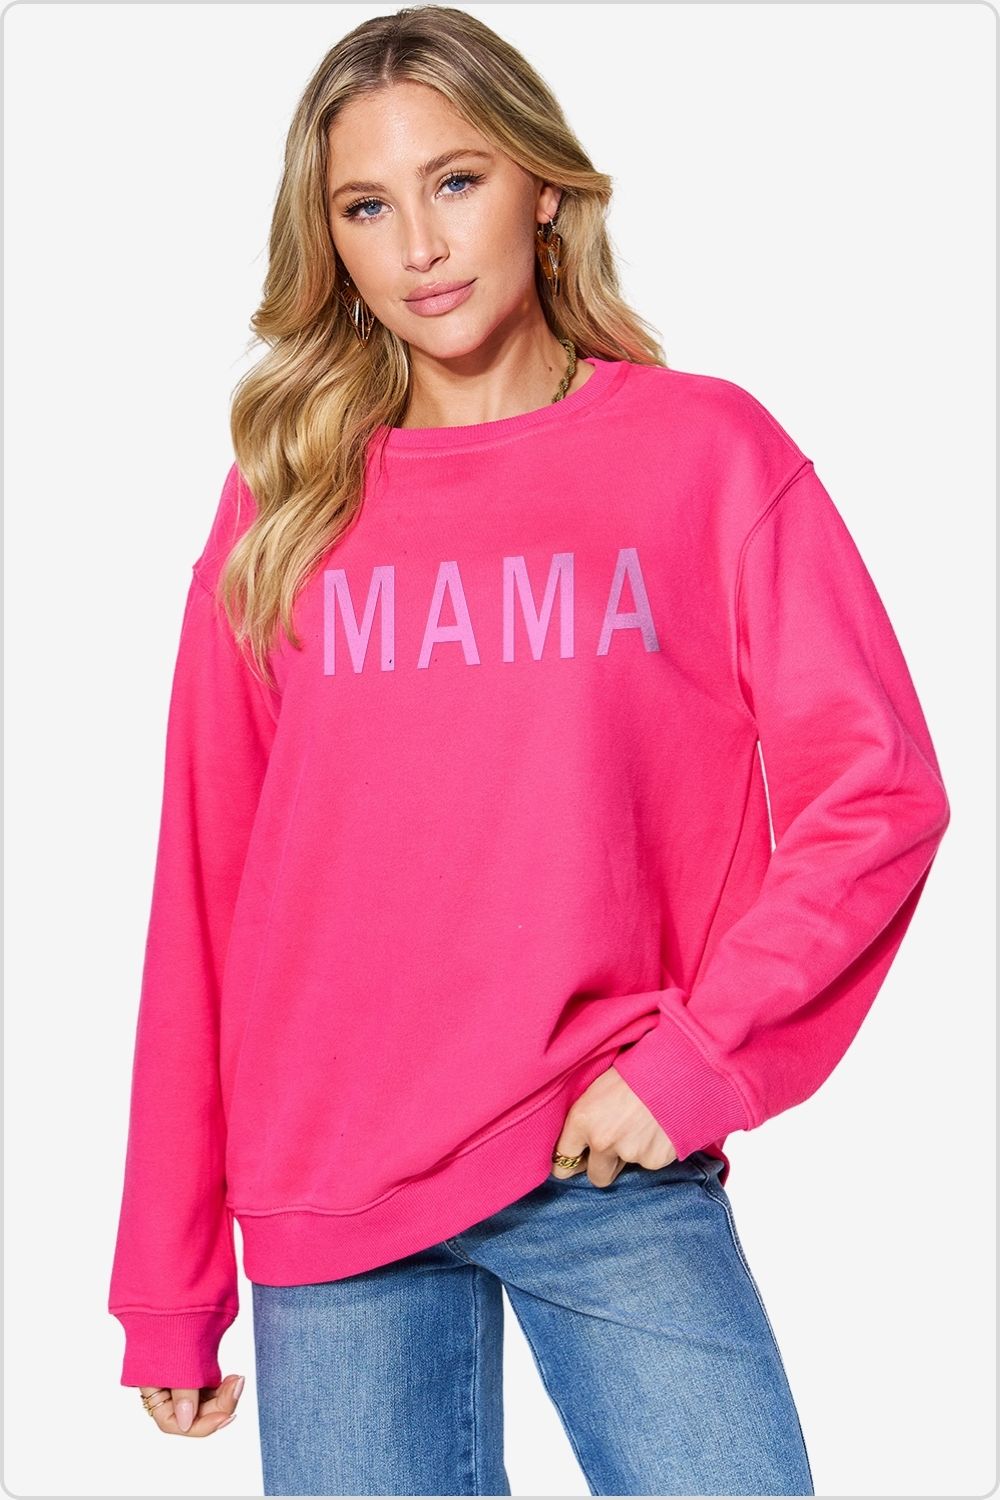 Stylish MAMA long sleeve sweatshirt, cozy and proud, Hot Pink.